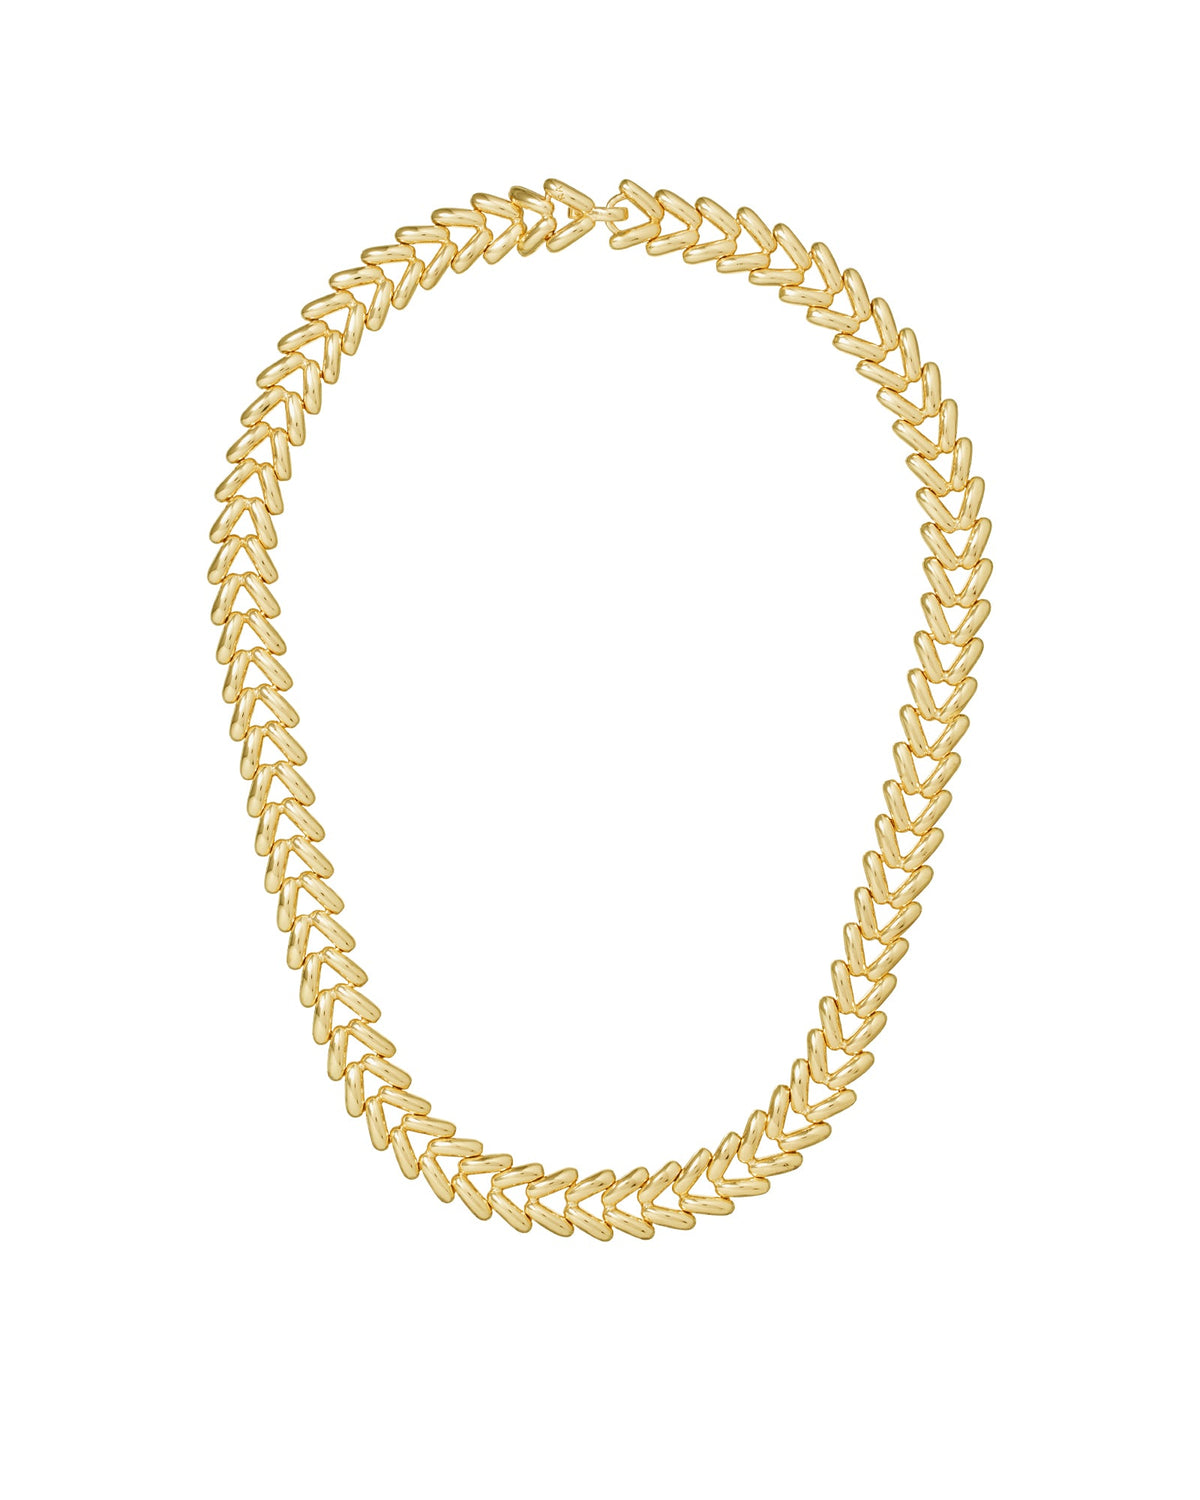 Roxanne Assoulin gold tone link necklace